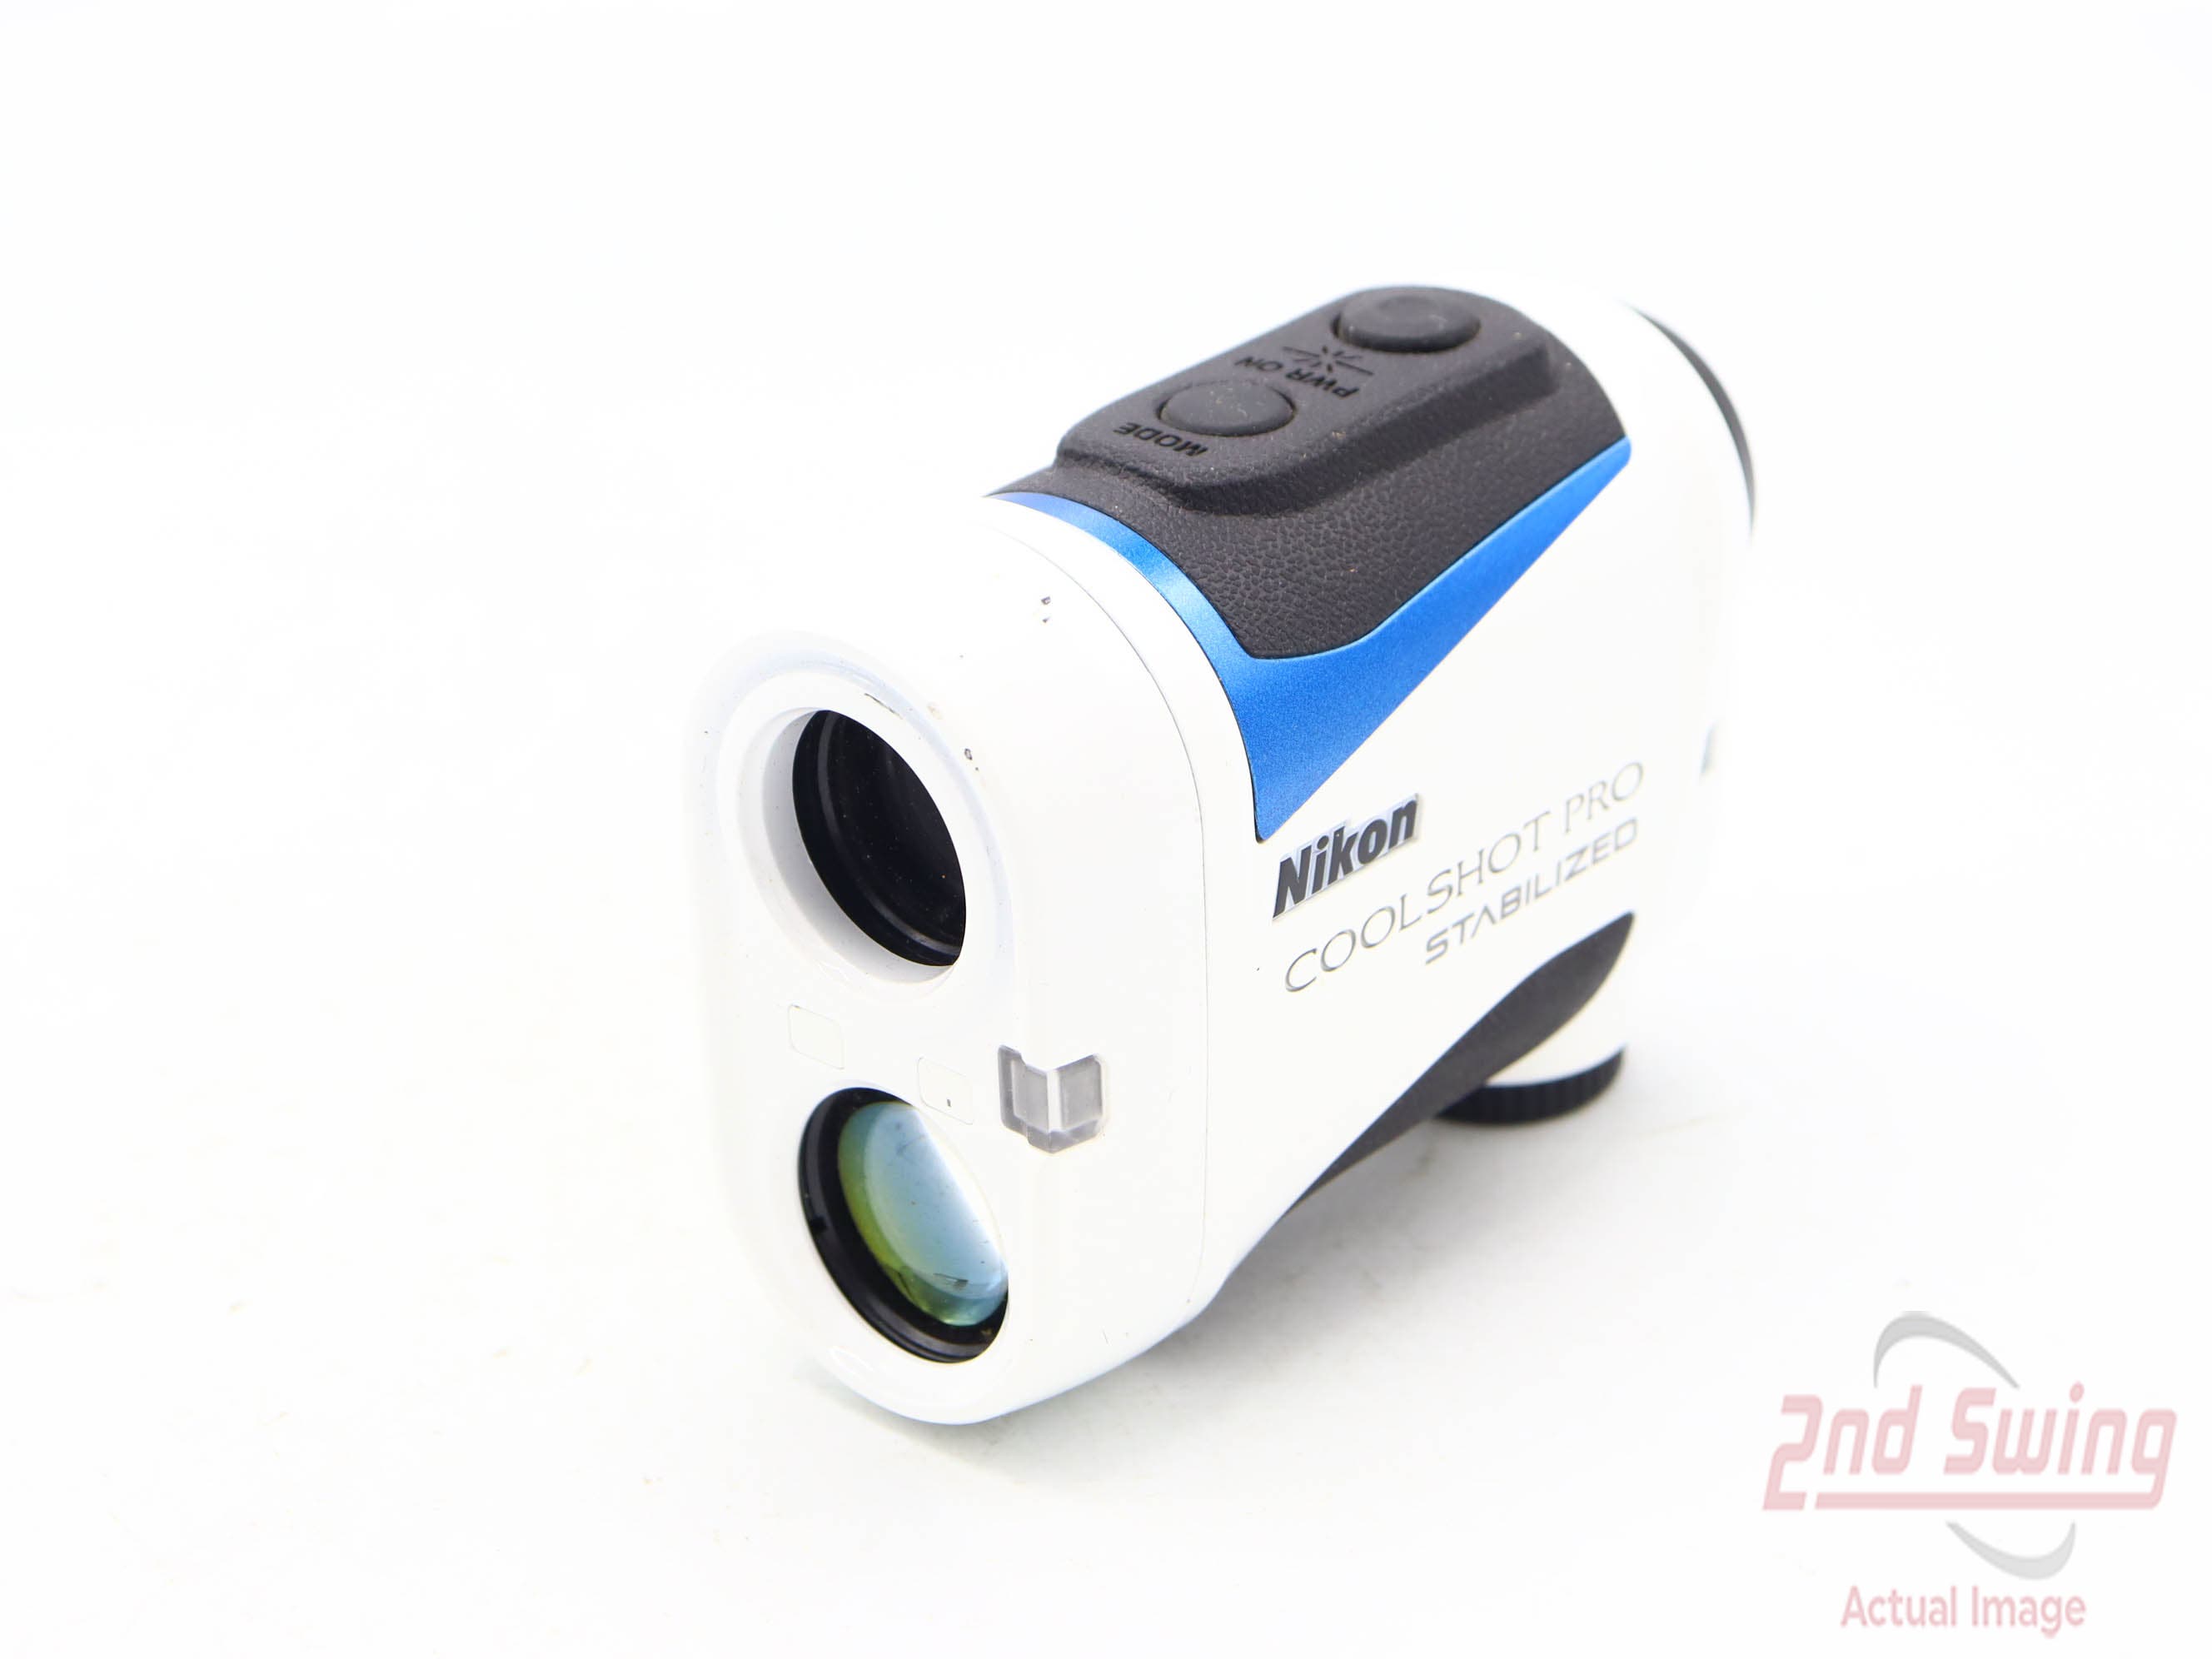 Nikon Coolshot Pro Stabilized Golf GPS & Rangefinders (D-92333937430)